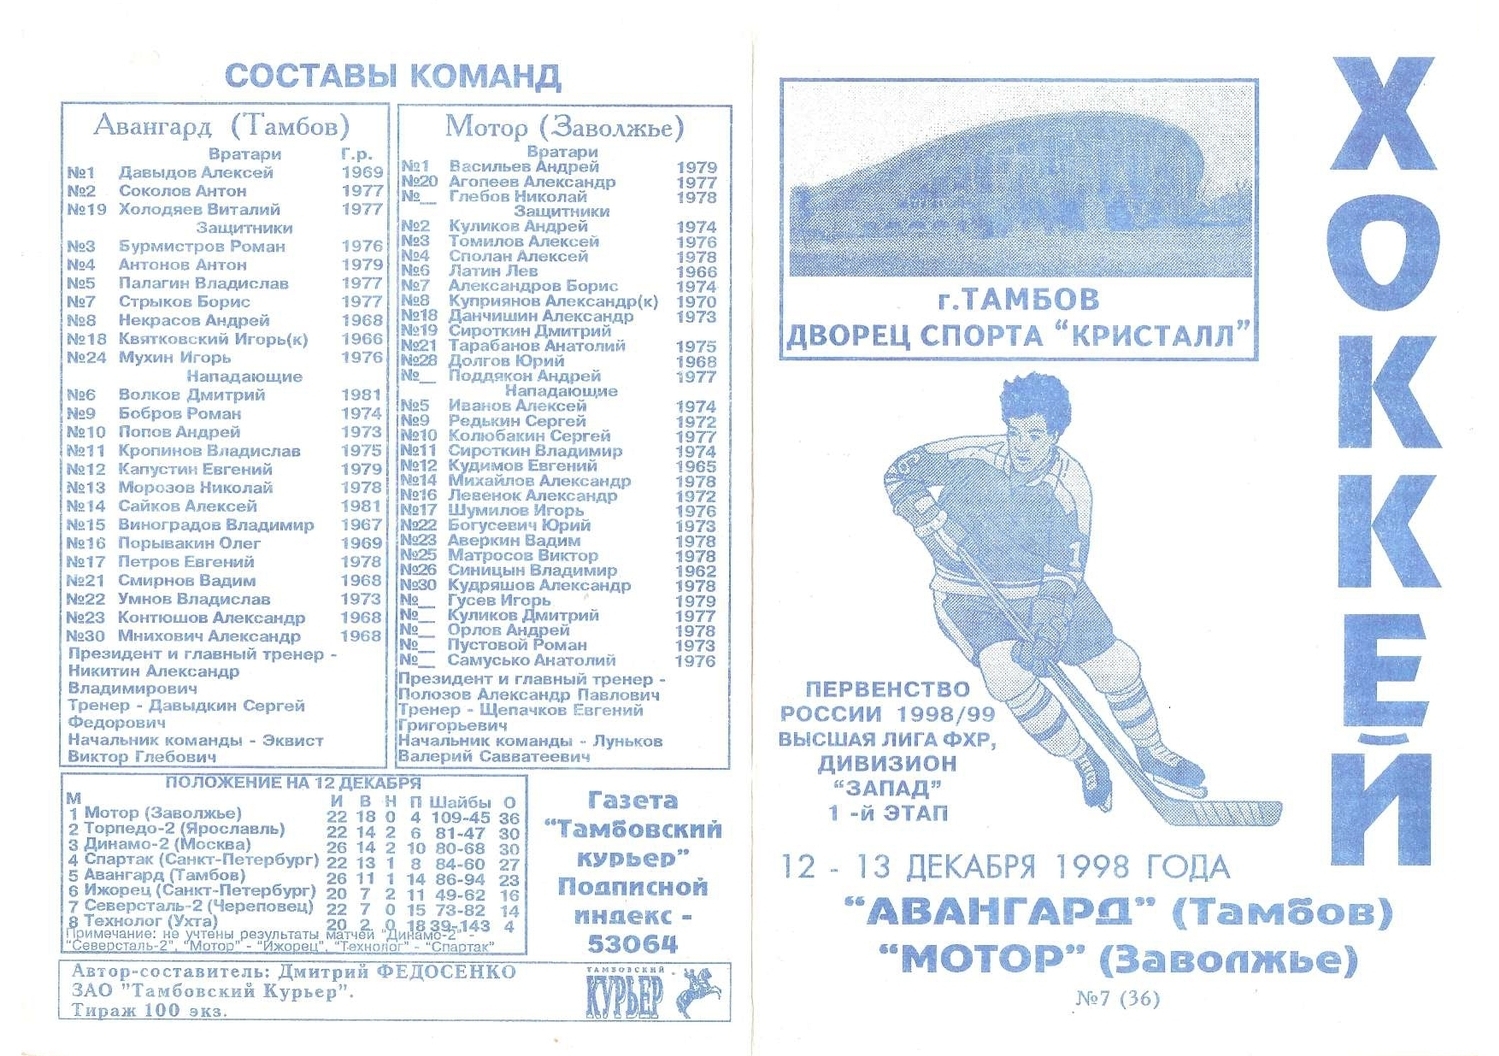 Программа "Авангард" Тамбов - "Мотор" Заволжье №36 от 12-13.12.1998г.